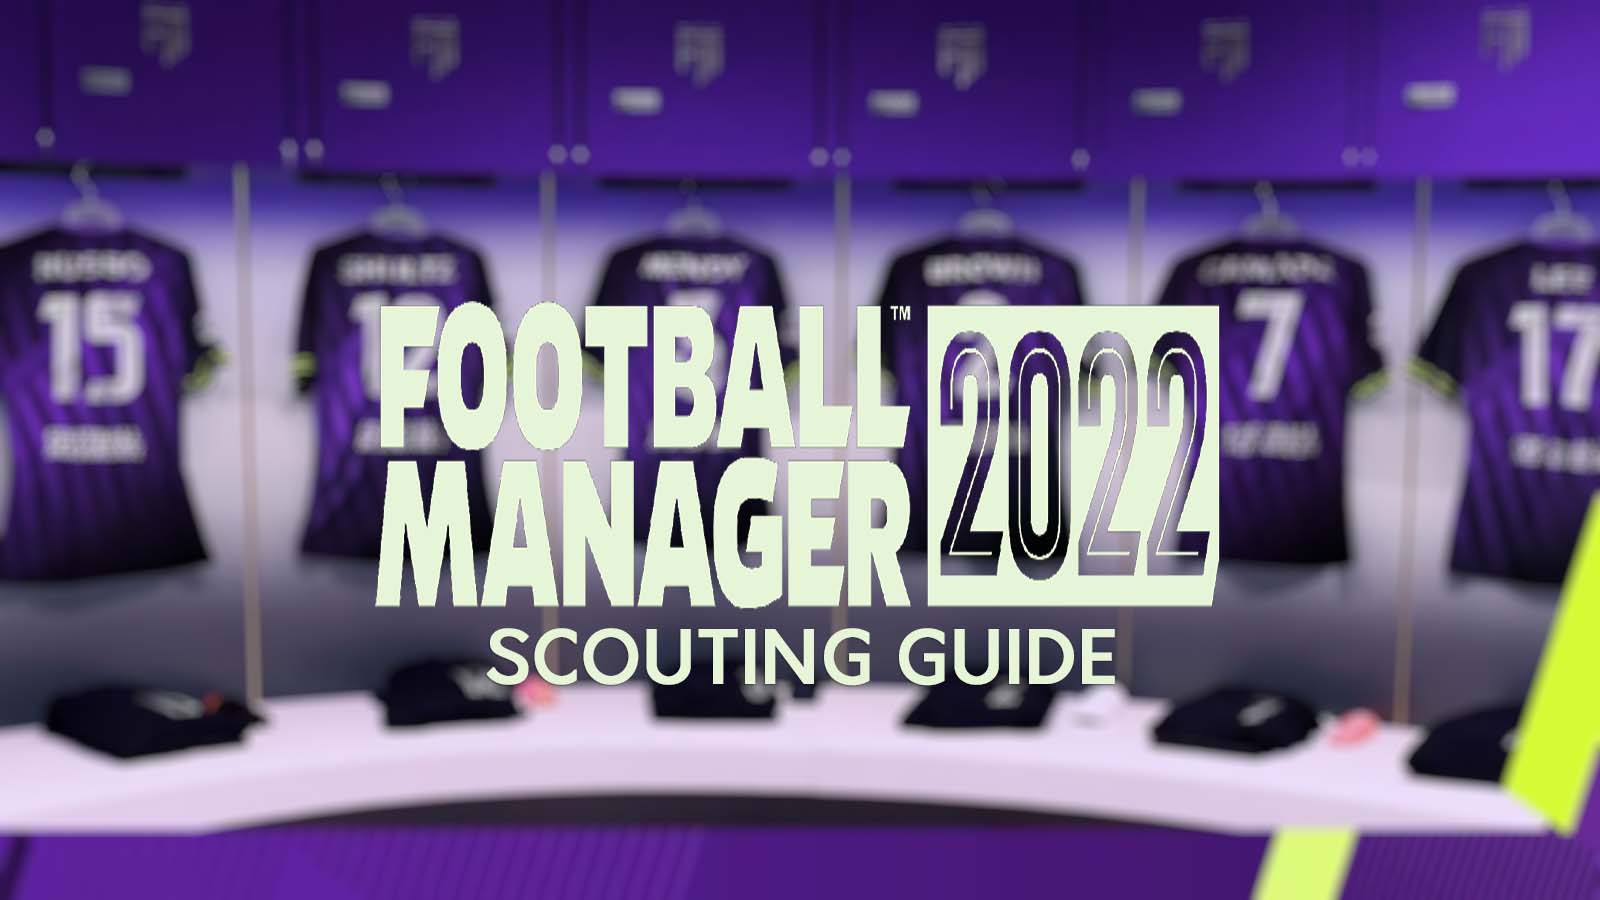 Análise Football Manager 2022 (PC)